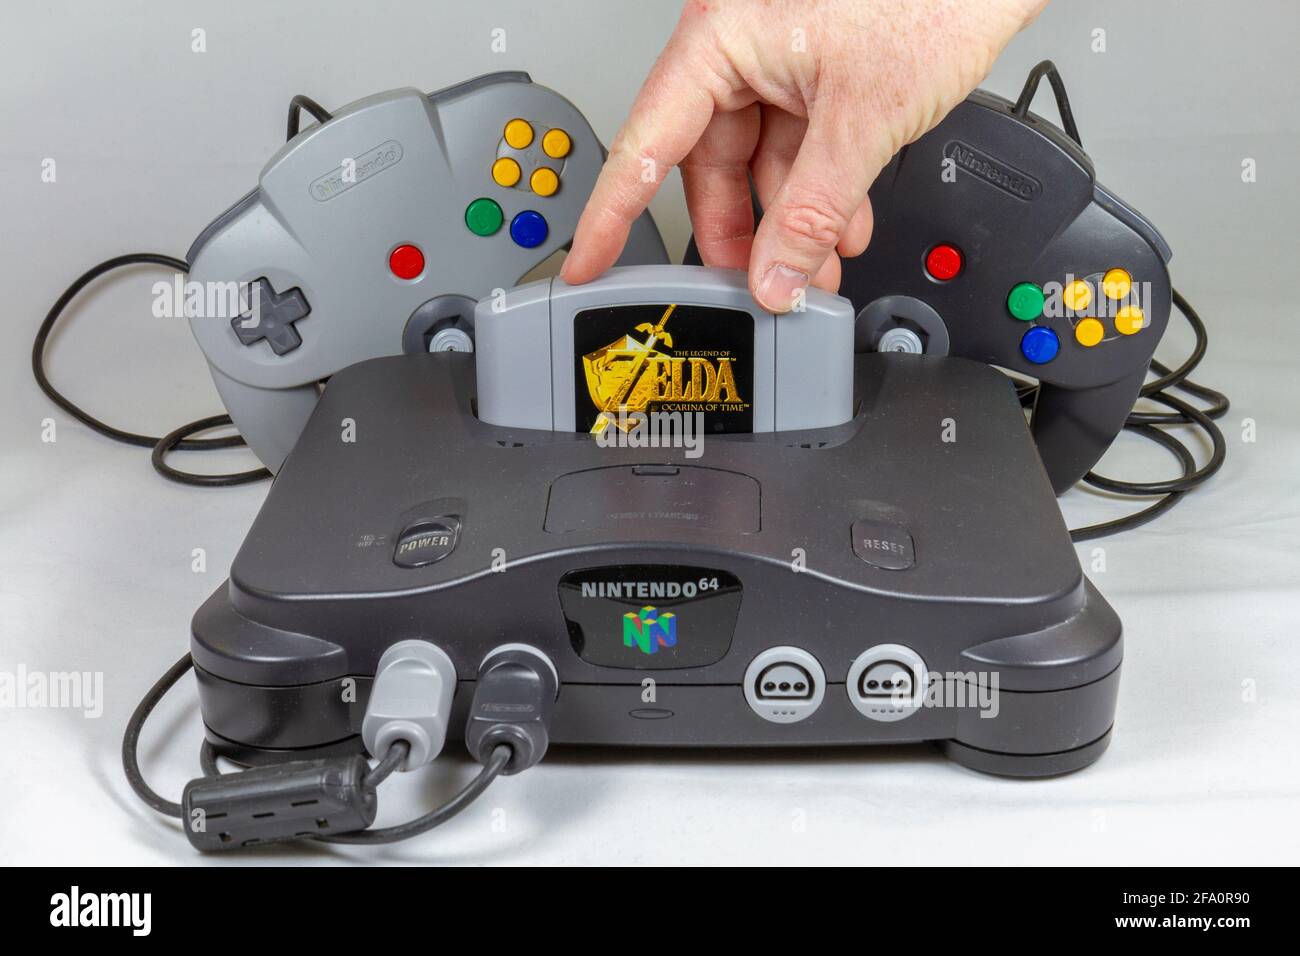 The Legend Of ZELDA Ocarina Of Time - Nintendo 64 - Used games – Just4Games